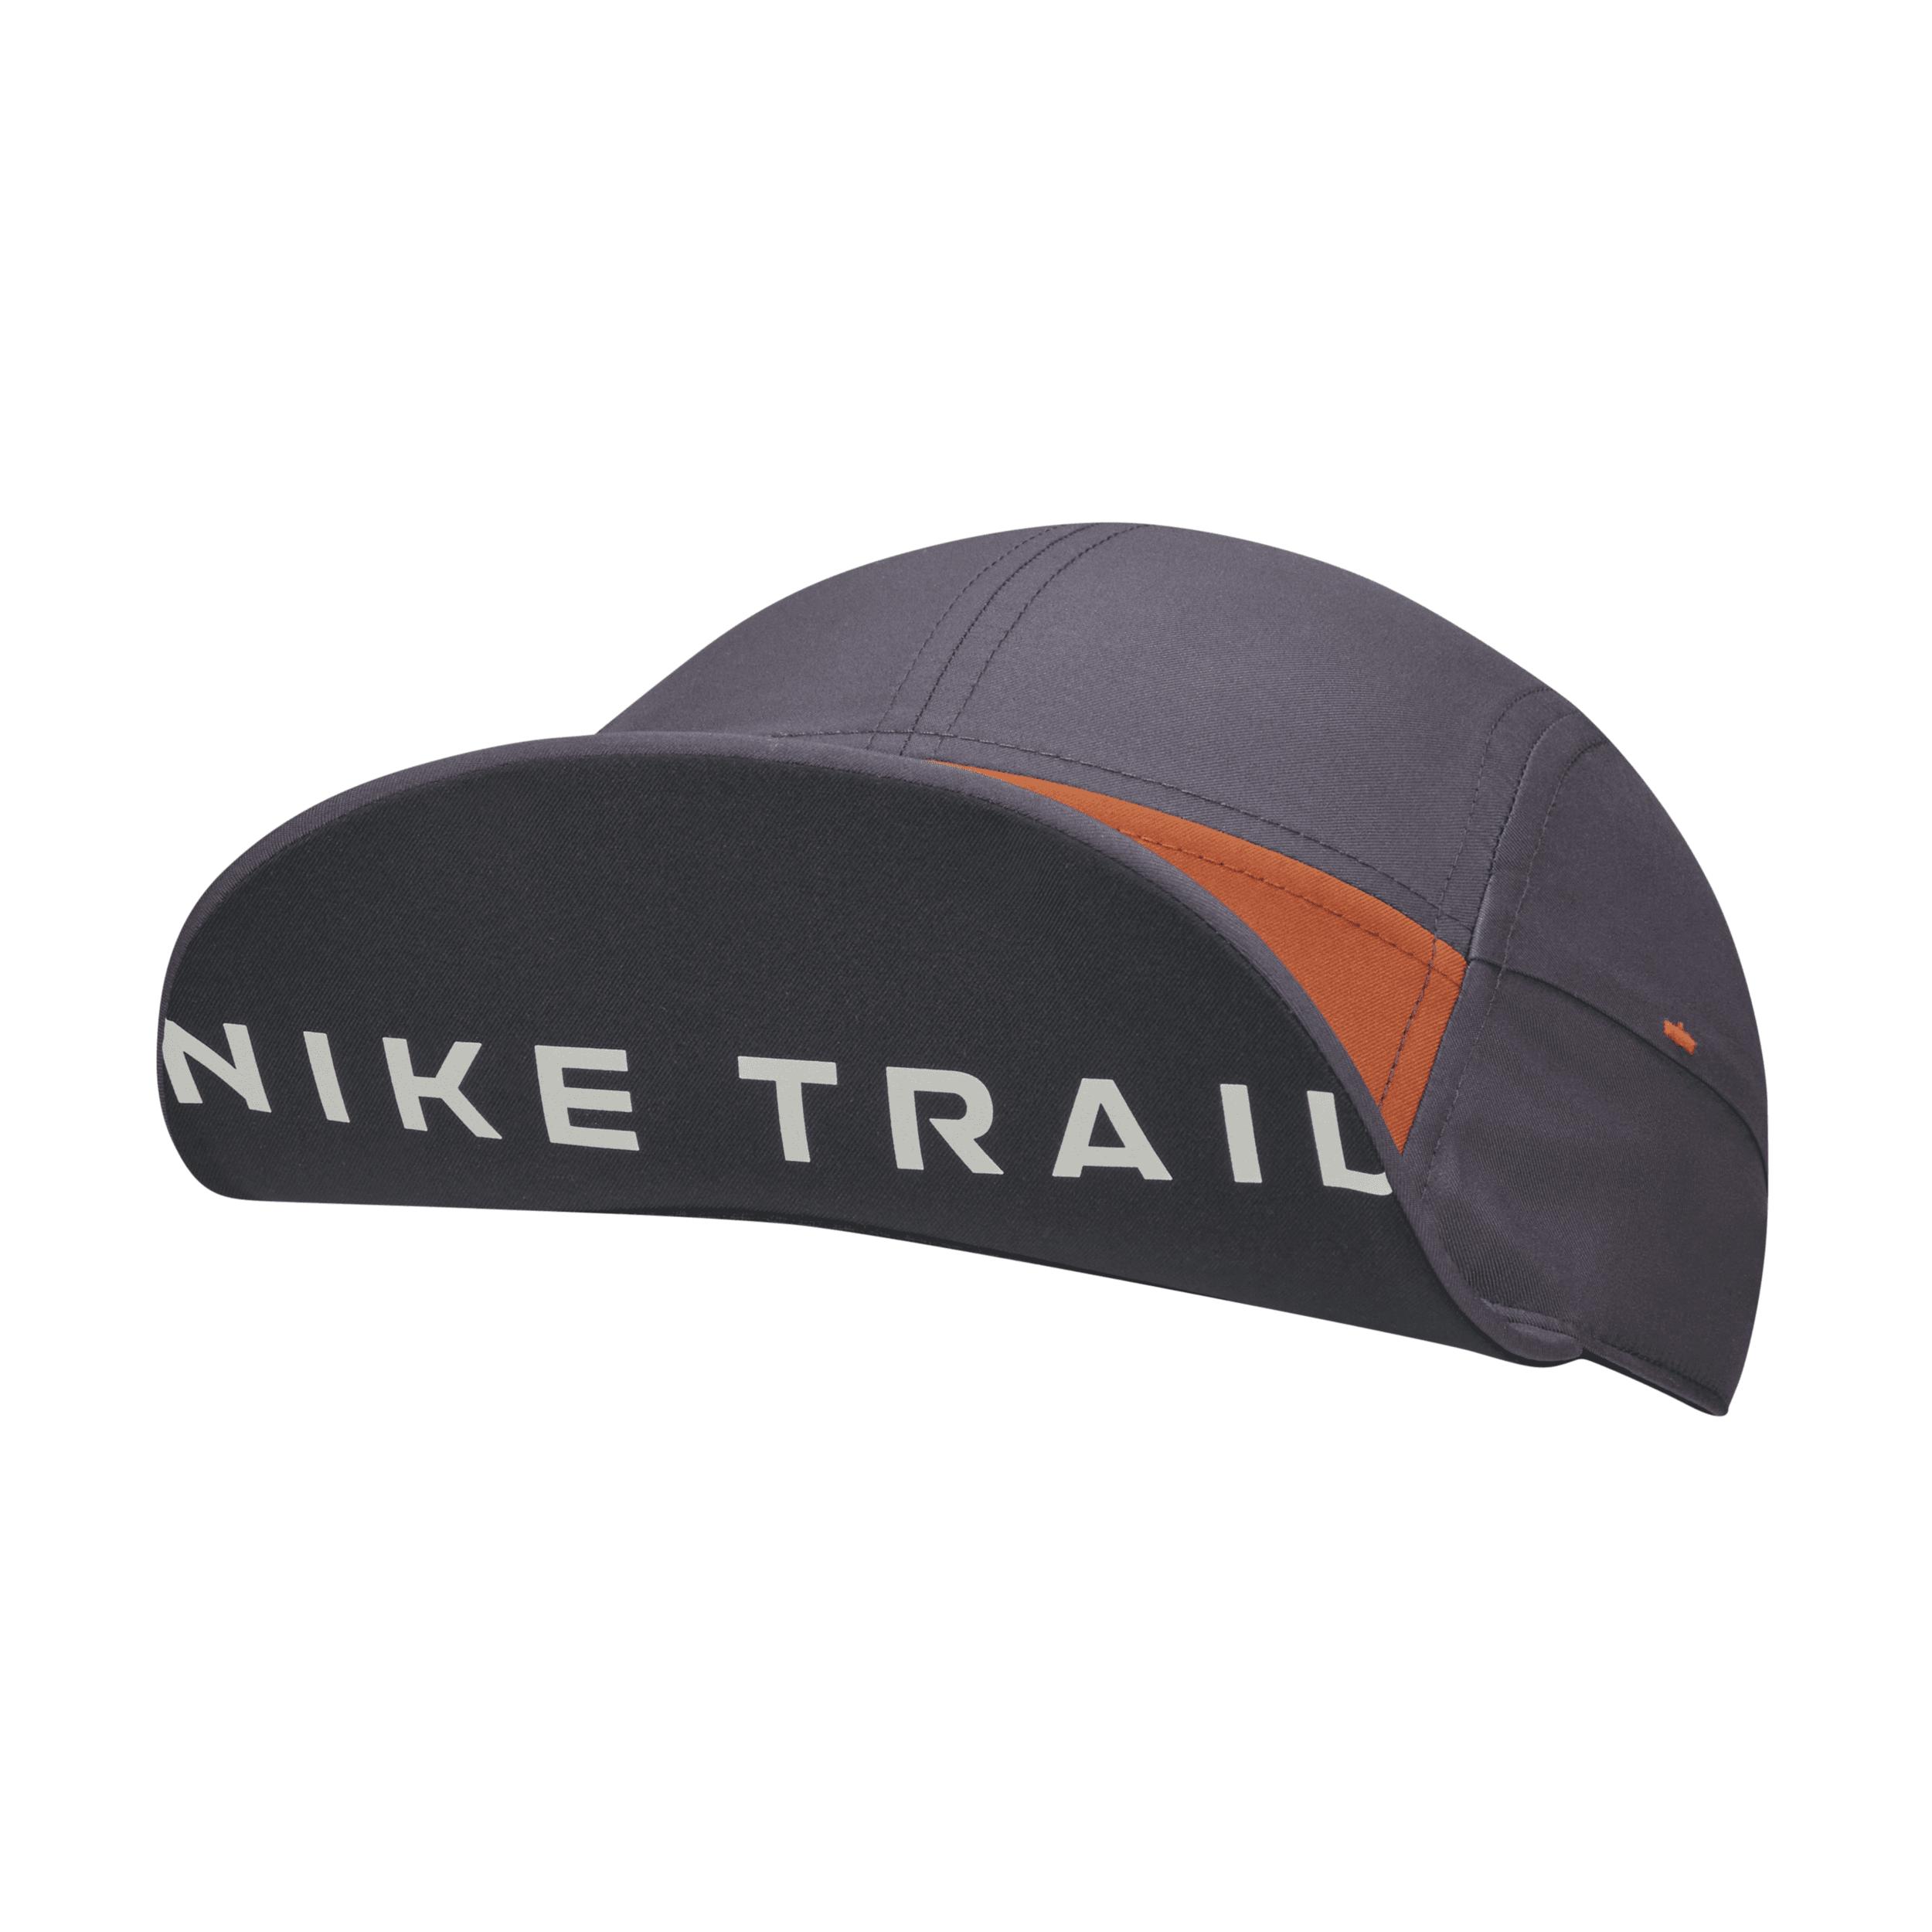 Nike Dri-fit Aw84 Trail Running Cap in Orange | Lyst